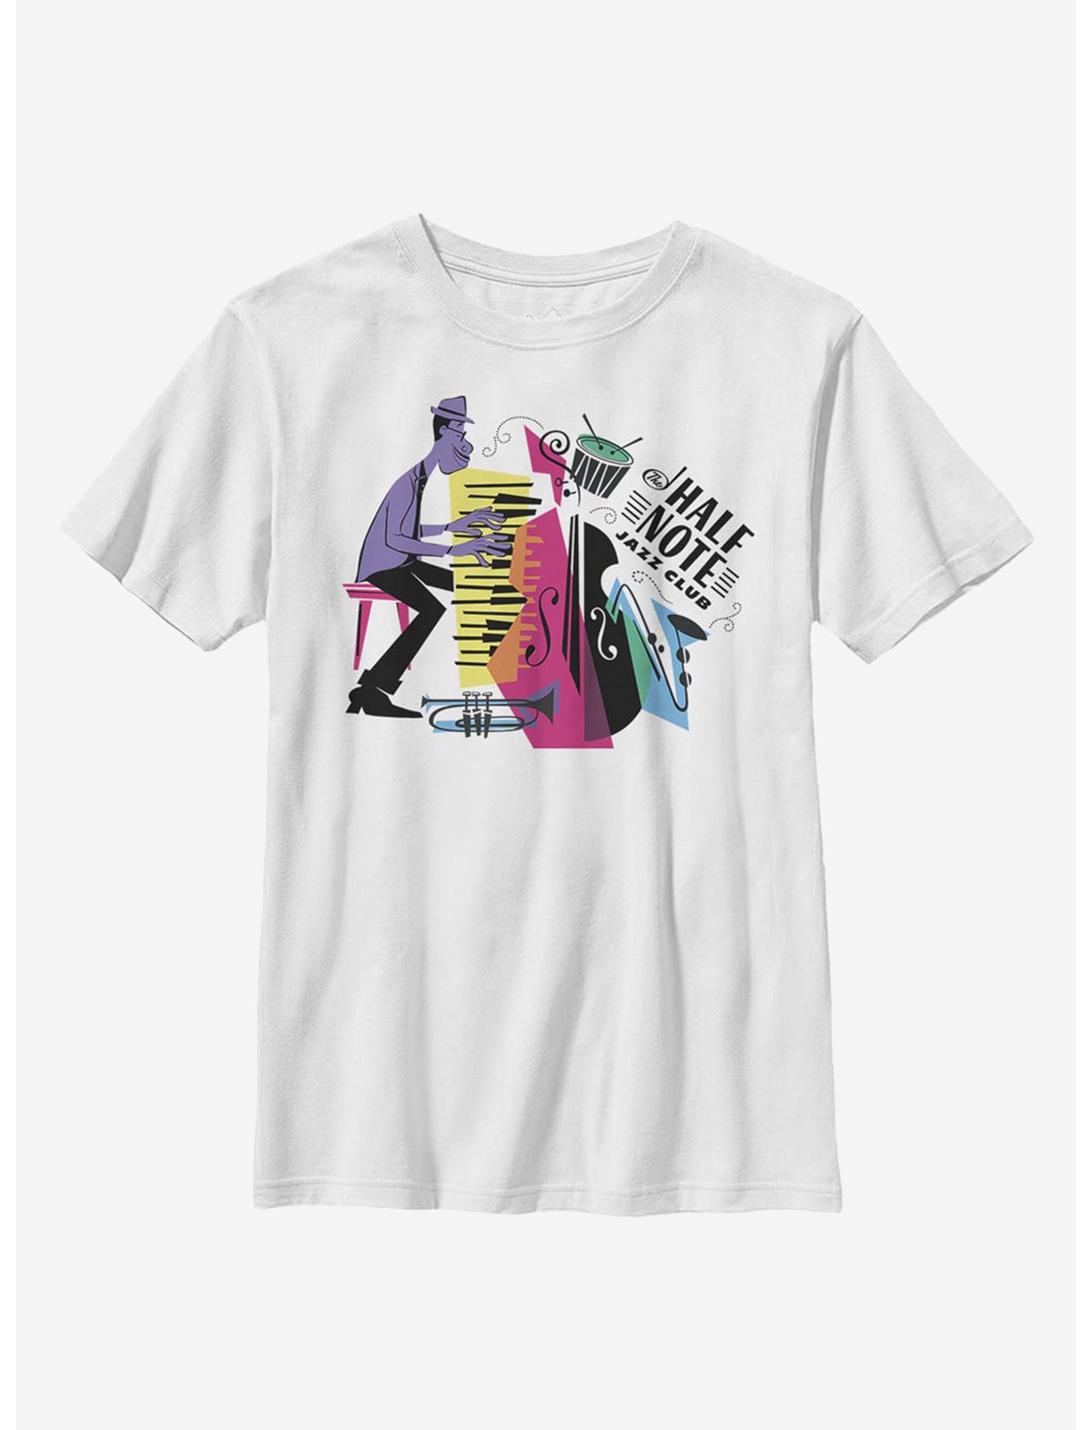 Disney Pixar Soul Half Note Jazz Club Badge Youth T-Shirt, WHITE, hi-res